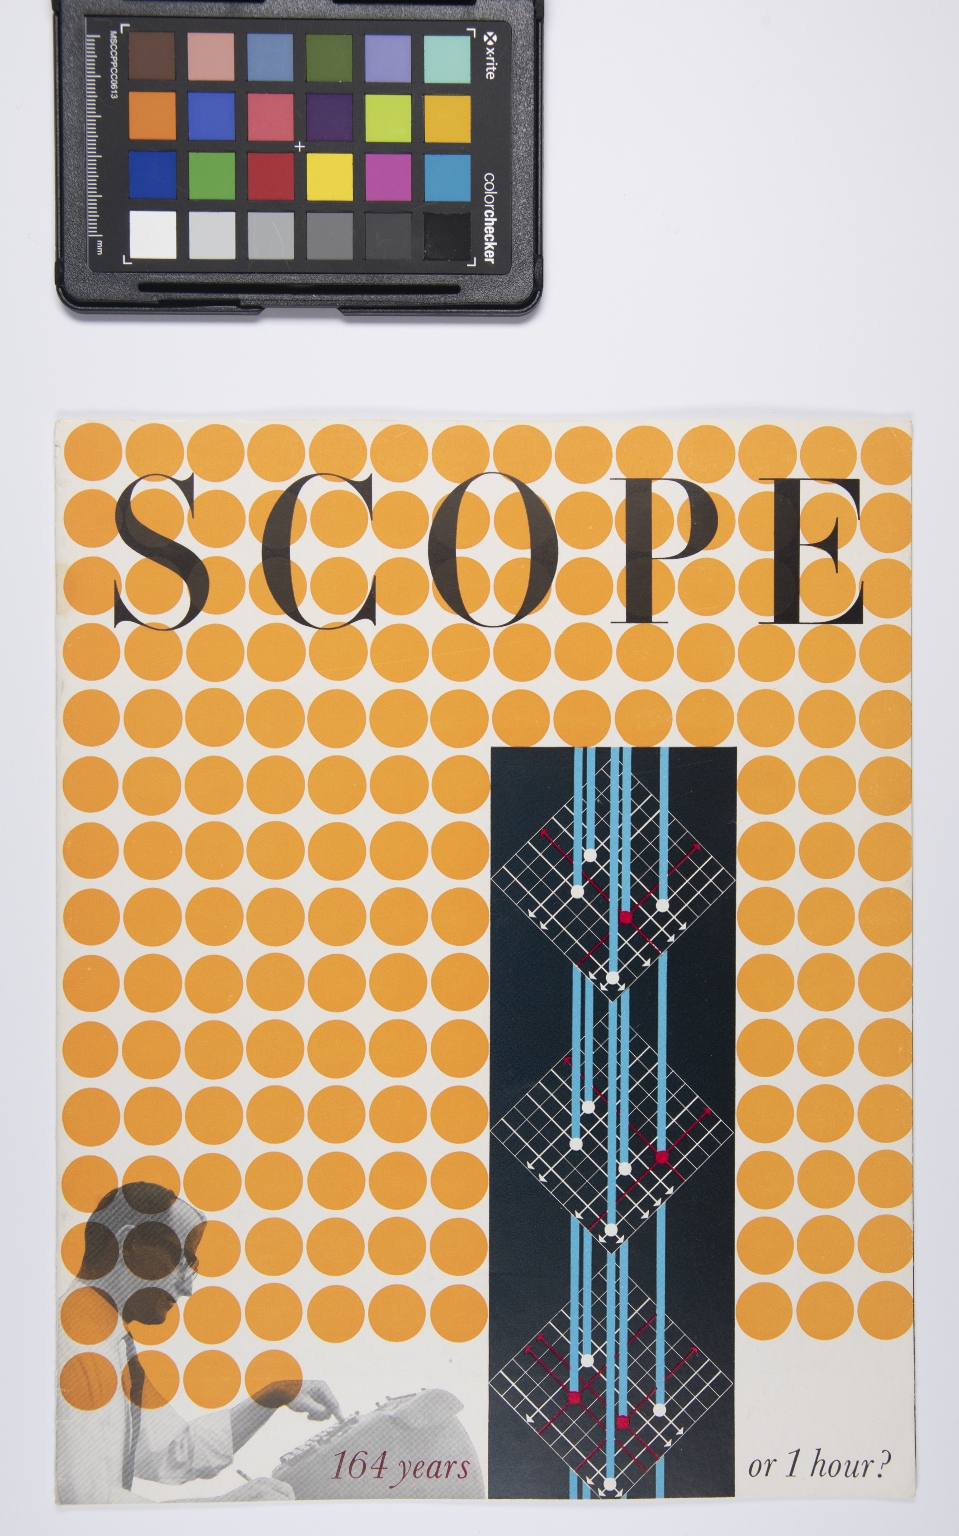 Scope, Volume IV, Number 11